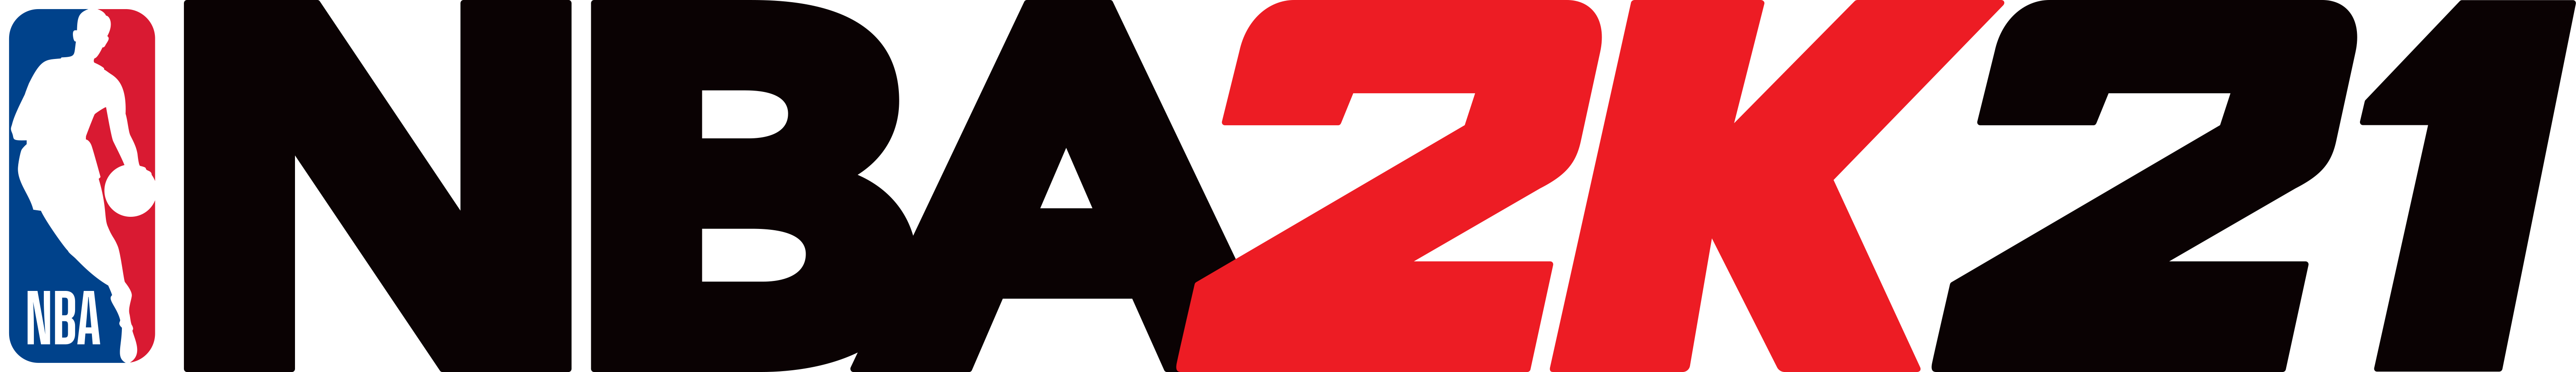 NBPA2K Logo